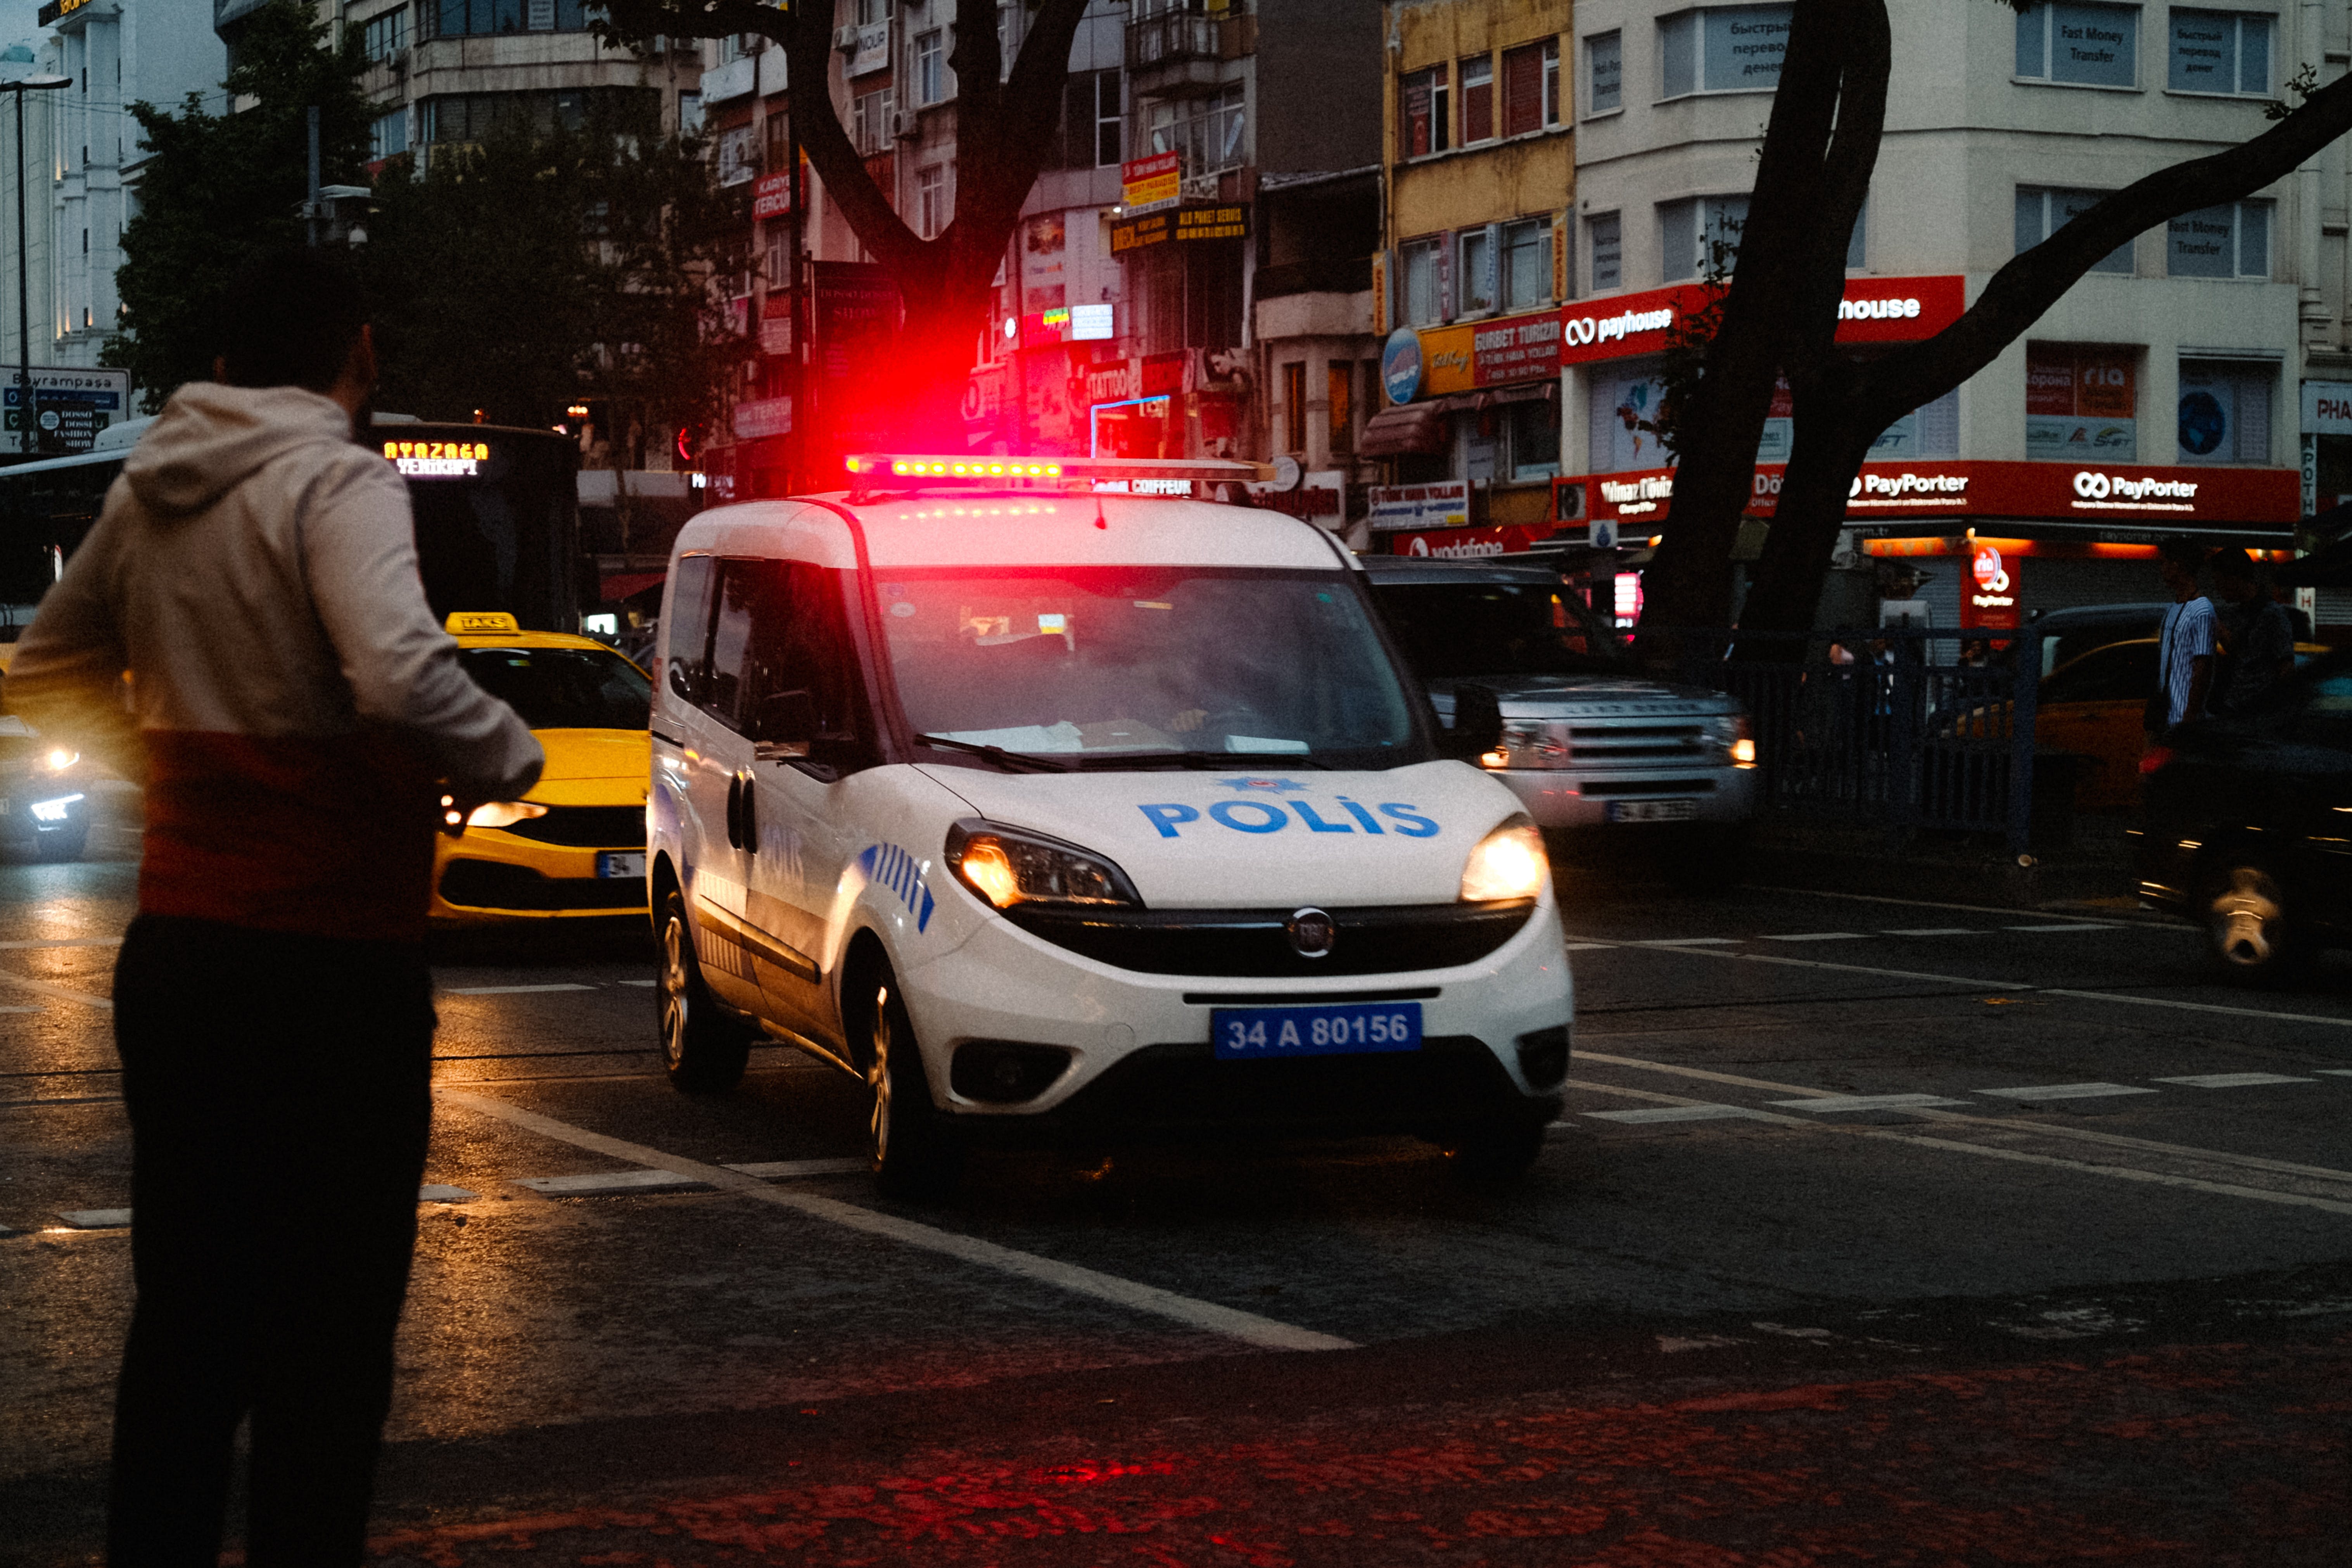 Polizei Maschine Sirene - Kostenloses Foto auf Pixabay - Pixabay